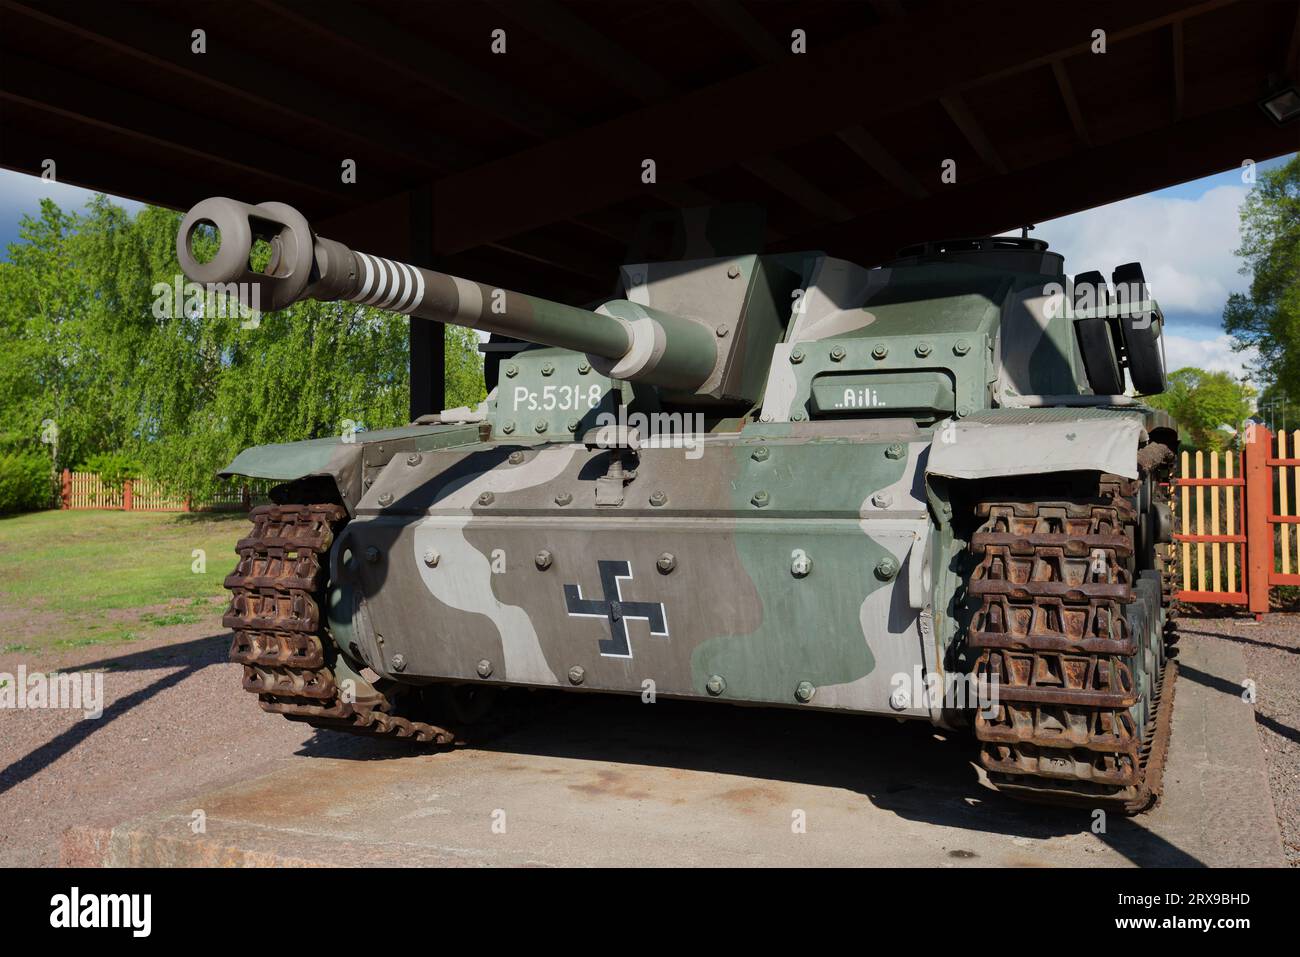 HAMINA, FINLAND - JUNE 03, 2017: Stug III Ausf G (Ps.531-8) - German self-propelled artillery during the Second world war, closeup Stock Photo